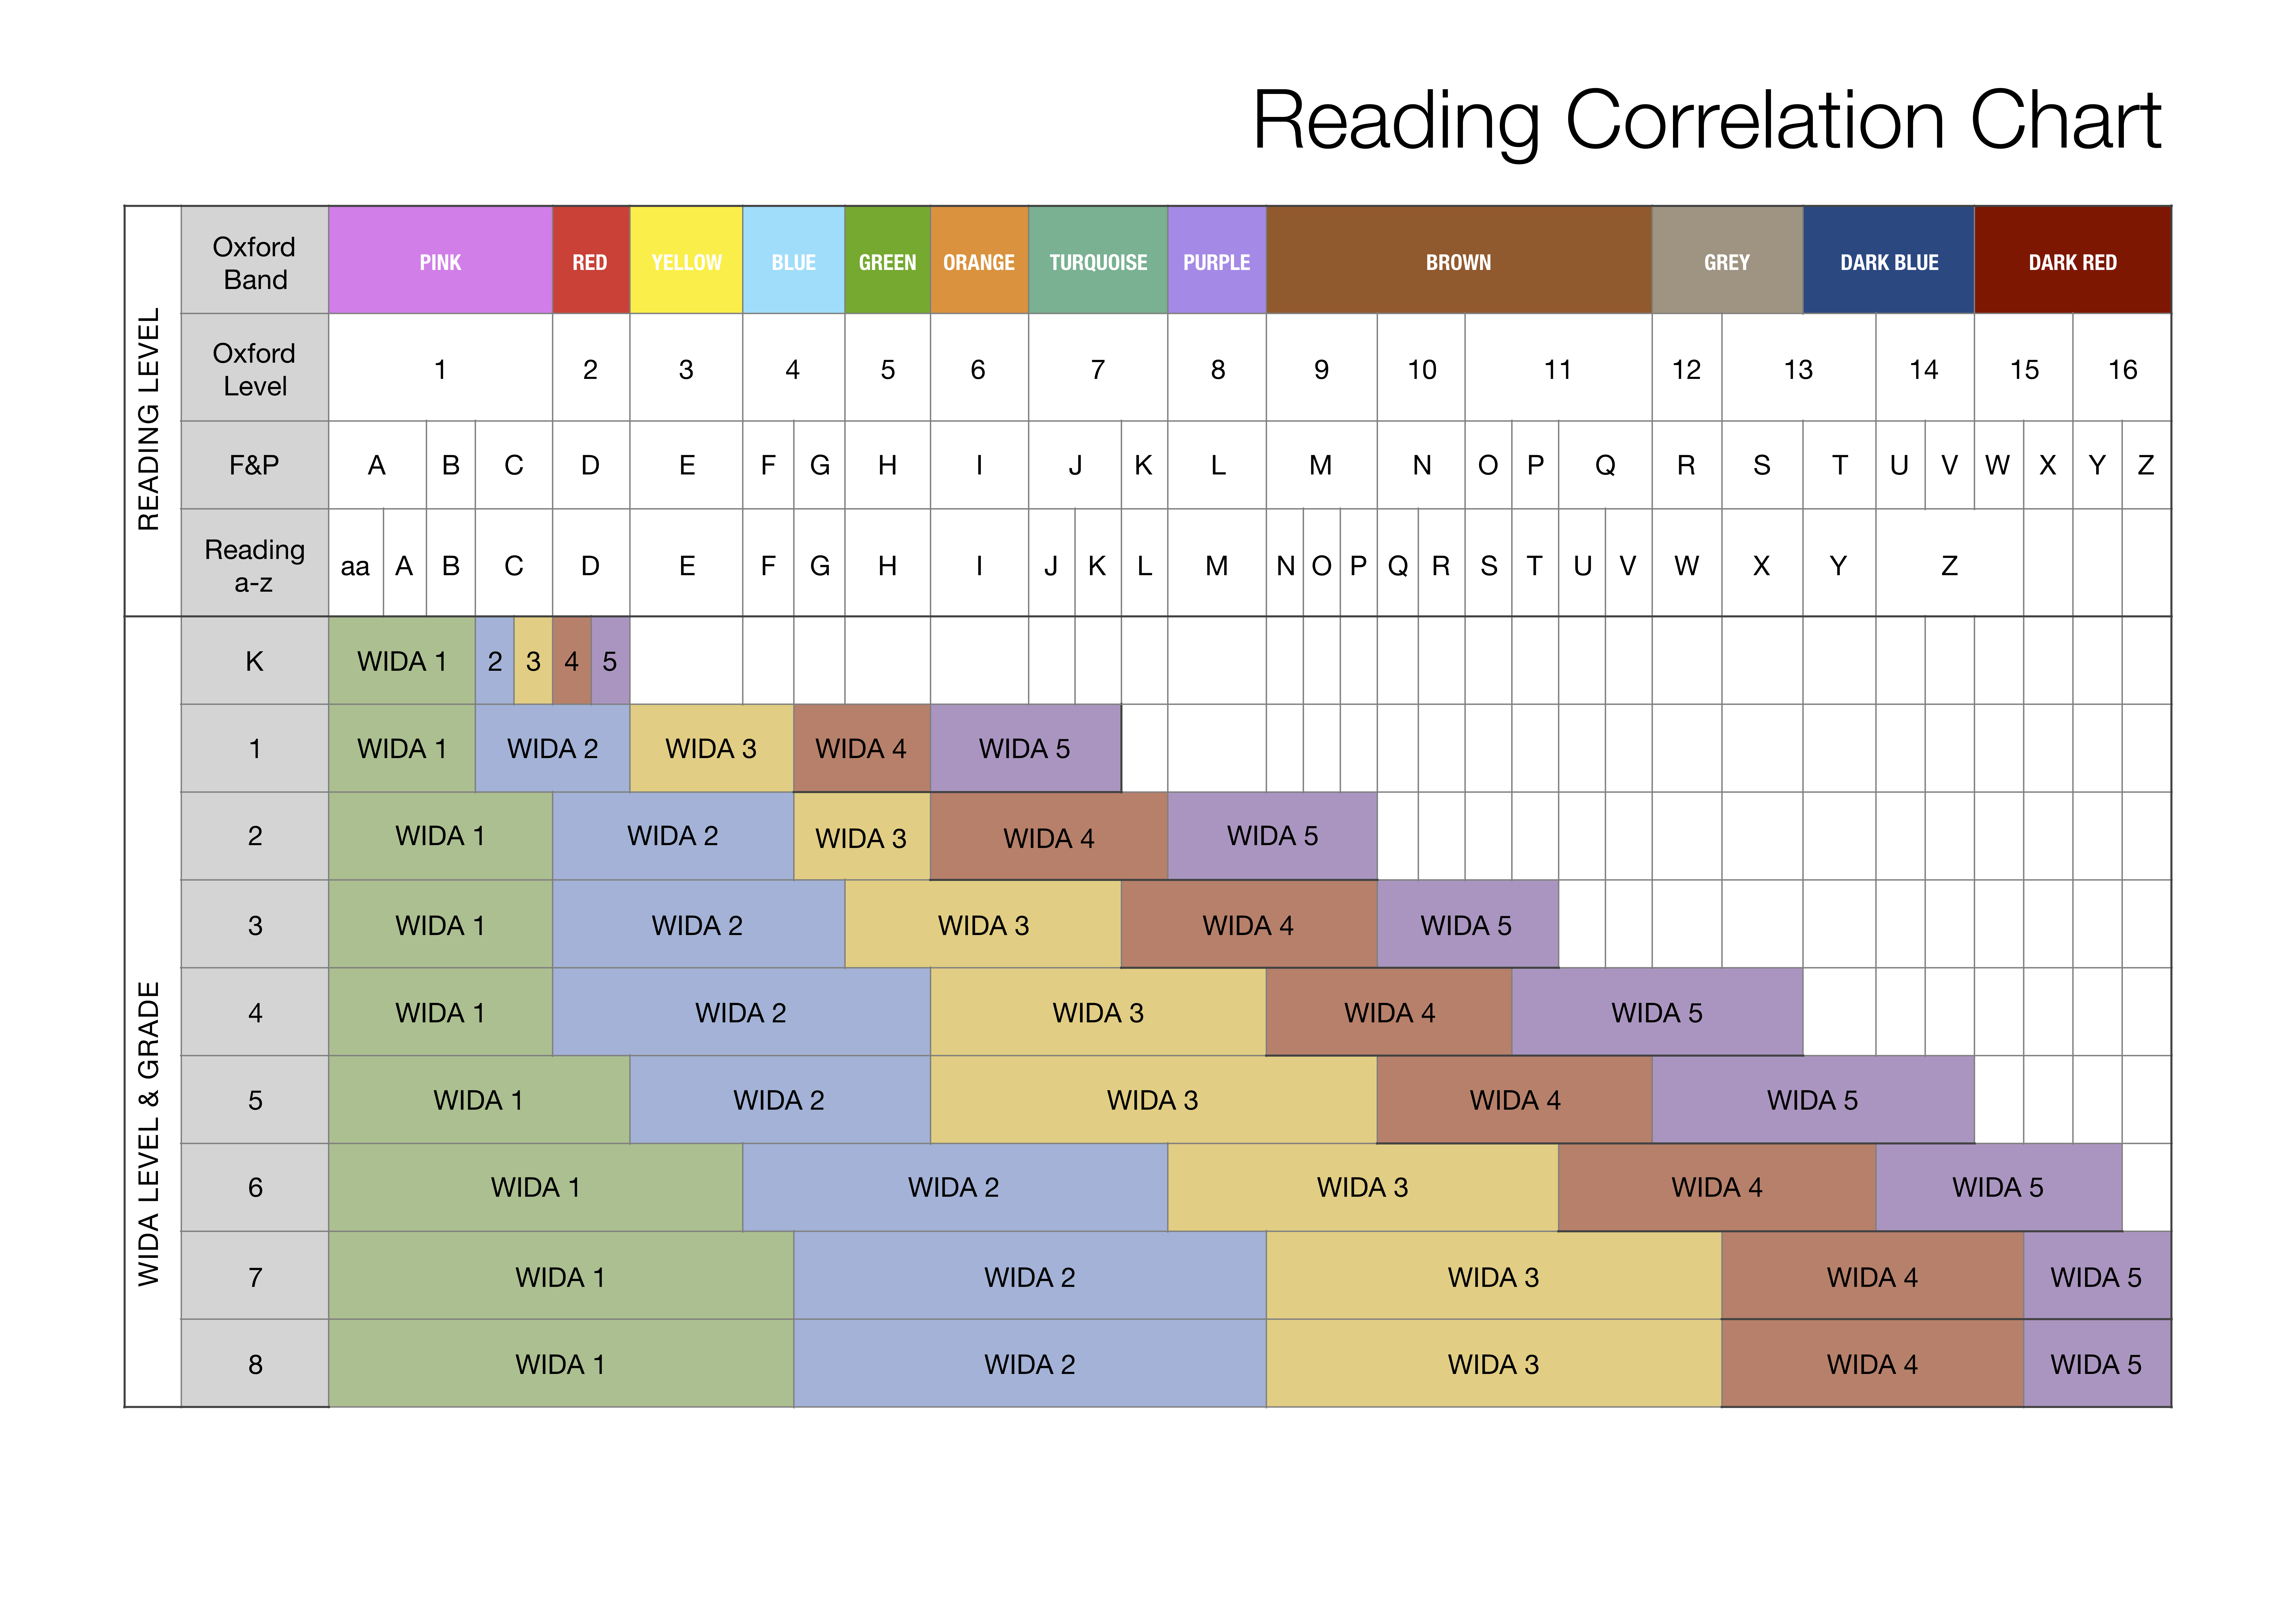 Oxford Reading Tree Correlation Chart